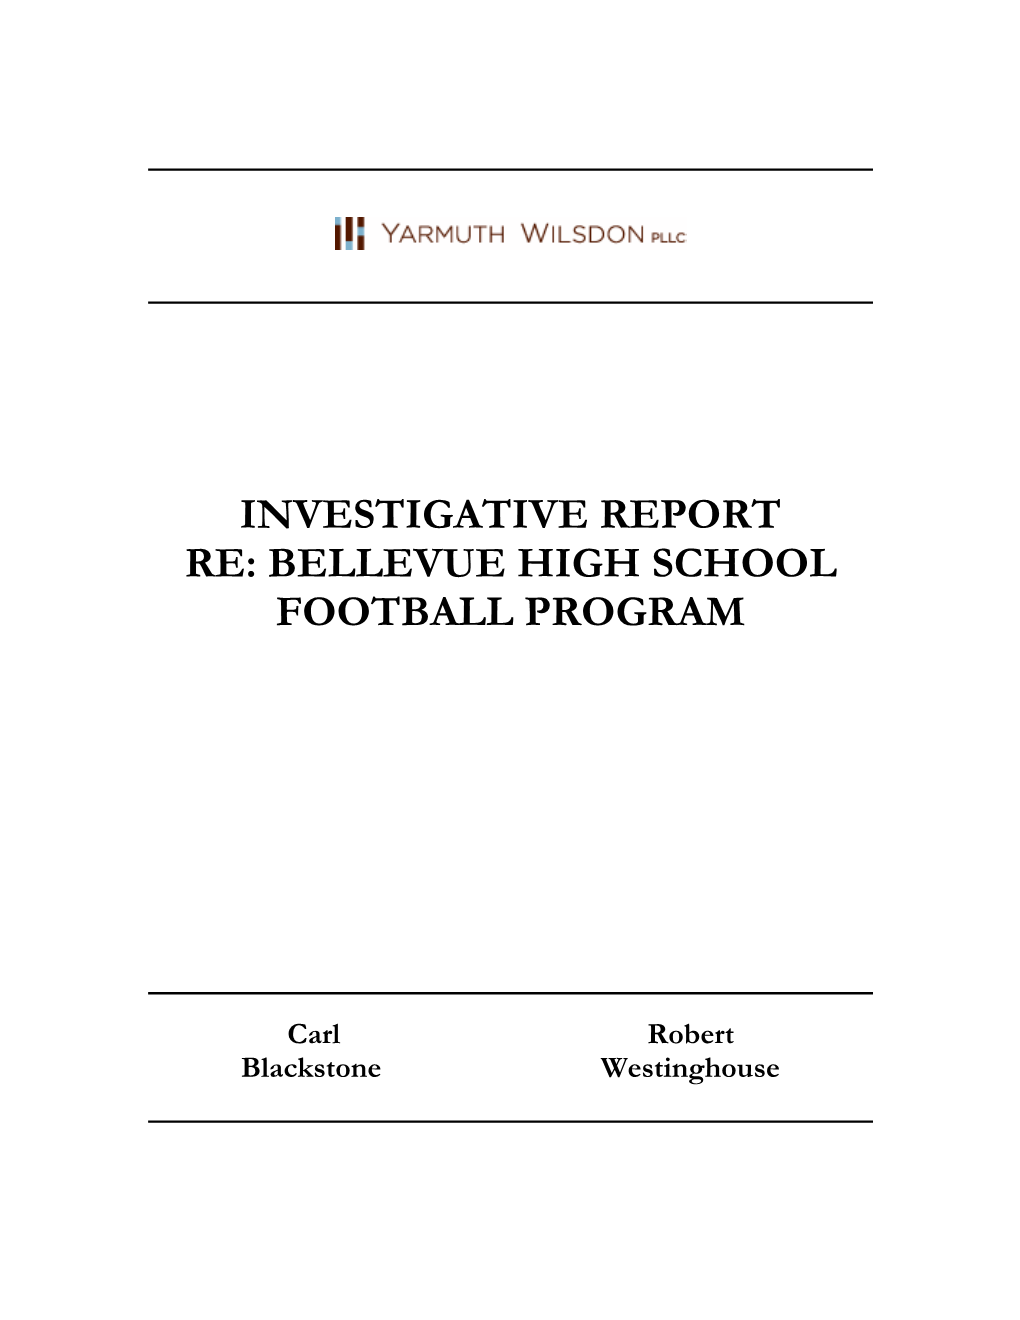 Investigative Report Re: Bellevue High School Football Program